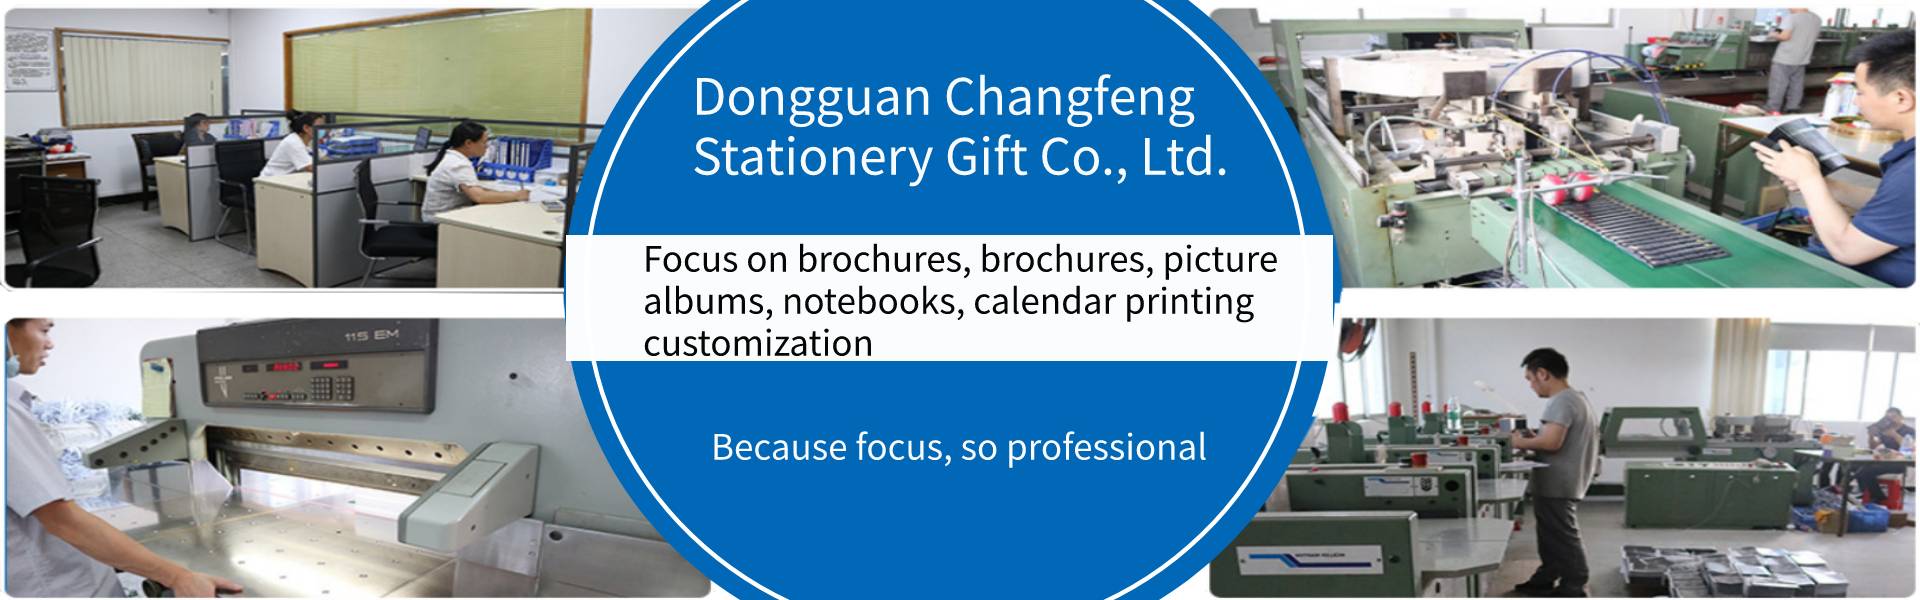 Bedienungsanleitung, Bildalbum, Notizbuch,Dongguan Changfeng Stationery Gift Co., Ltd.